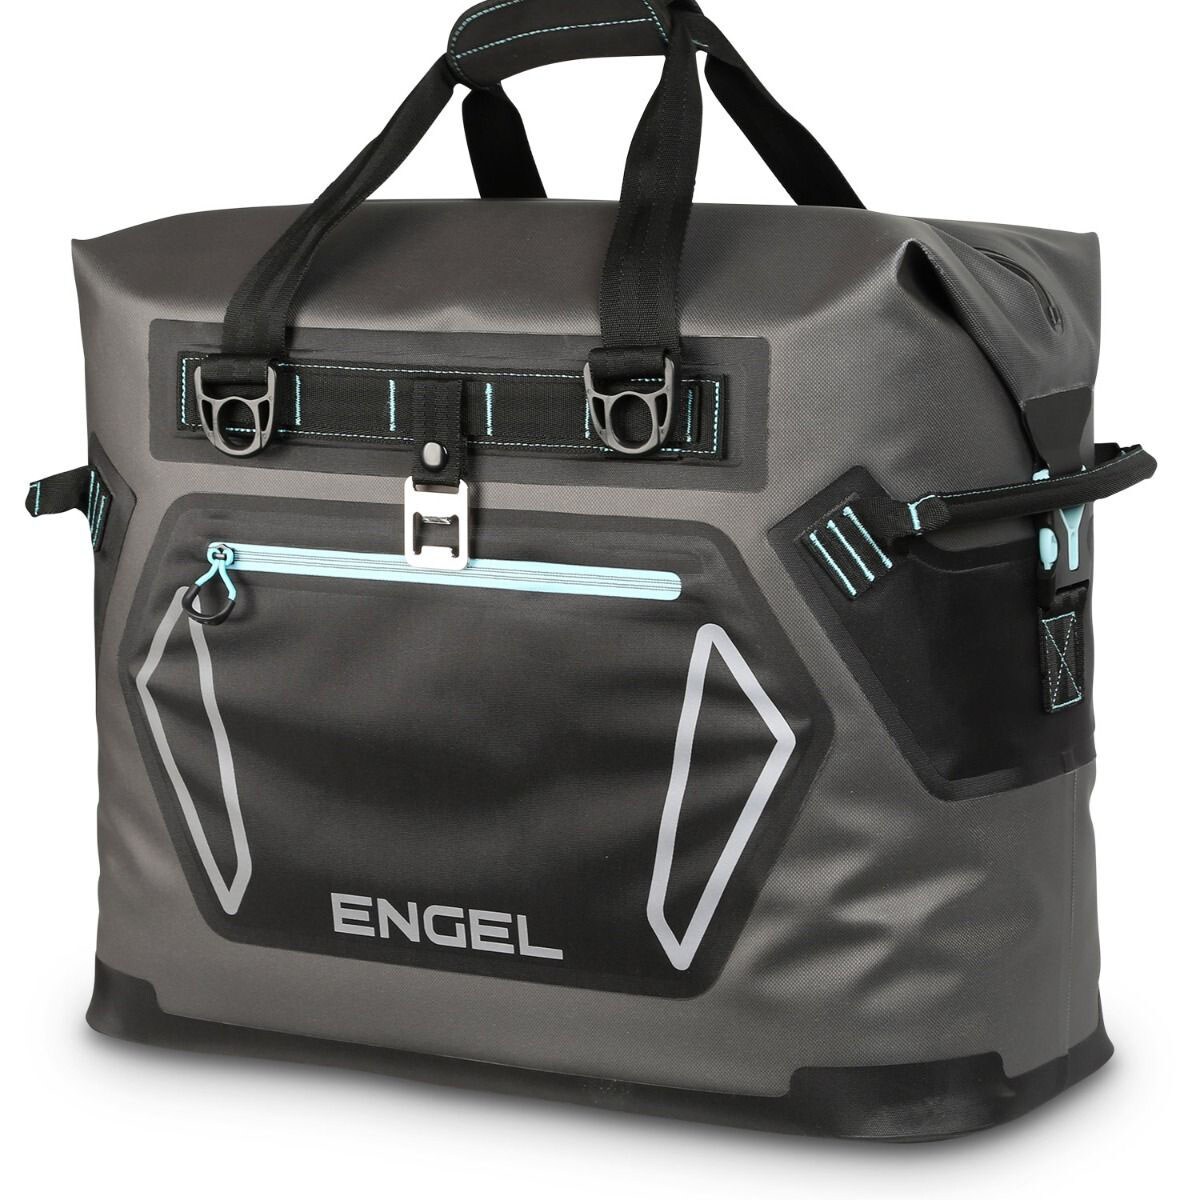 Engel Portable Hd20 Waterproof Soft-sided Cooler Bag Engtpu20-green Green for sale online 